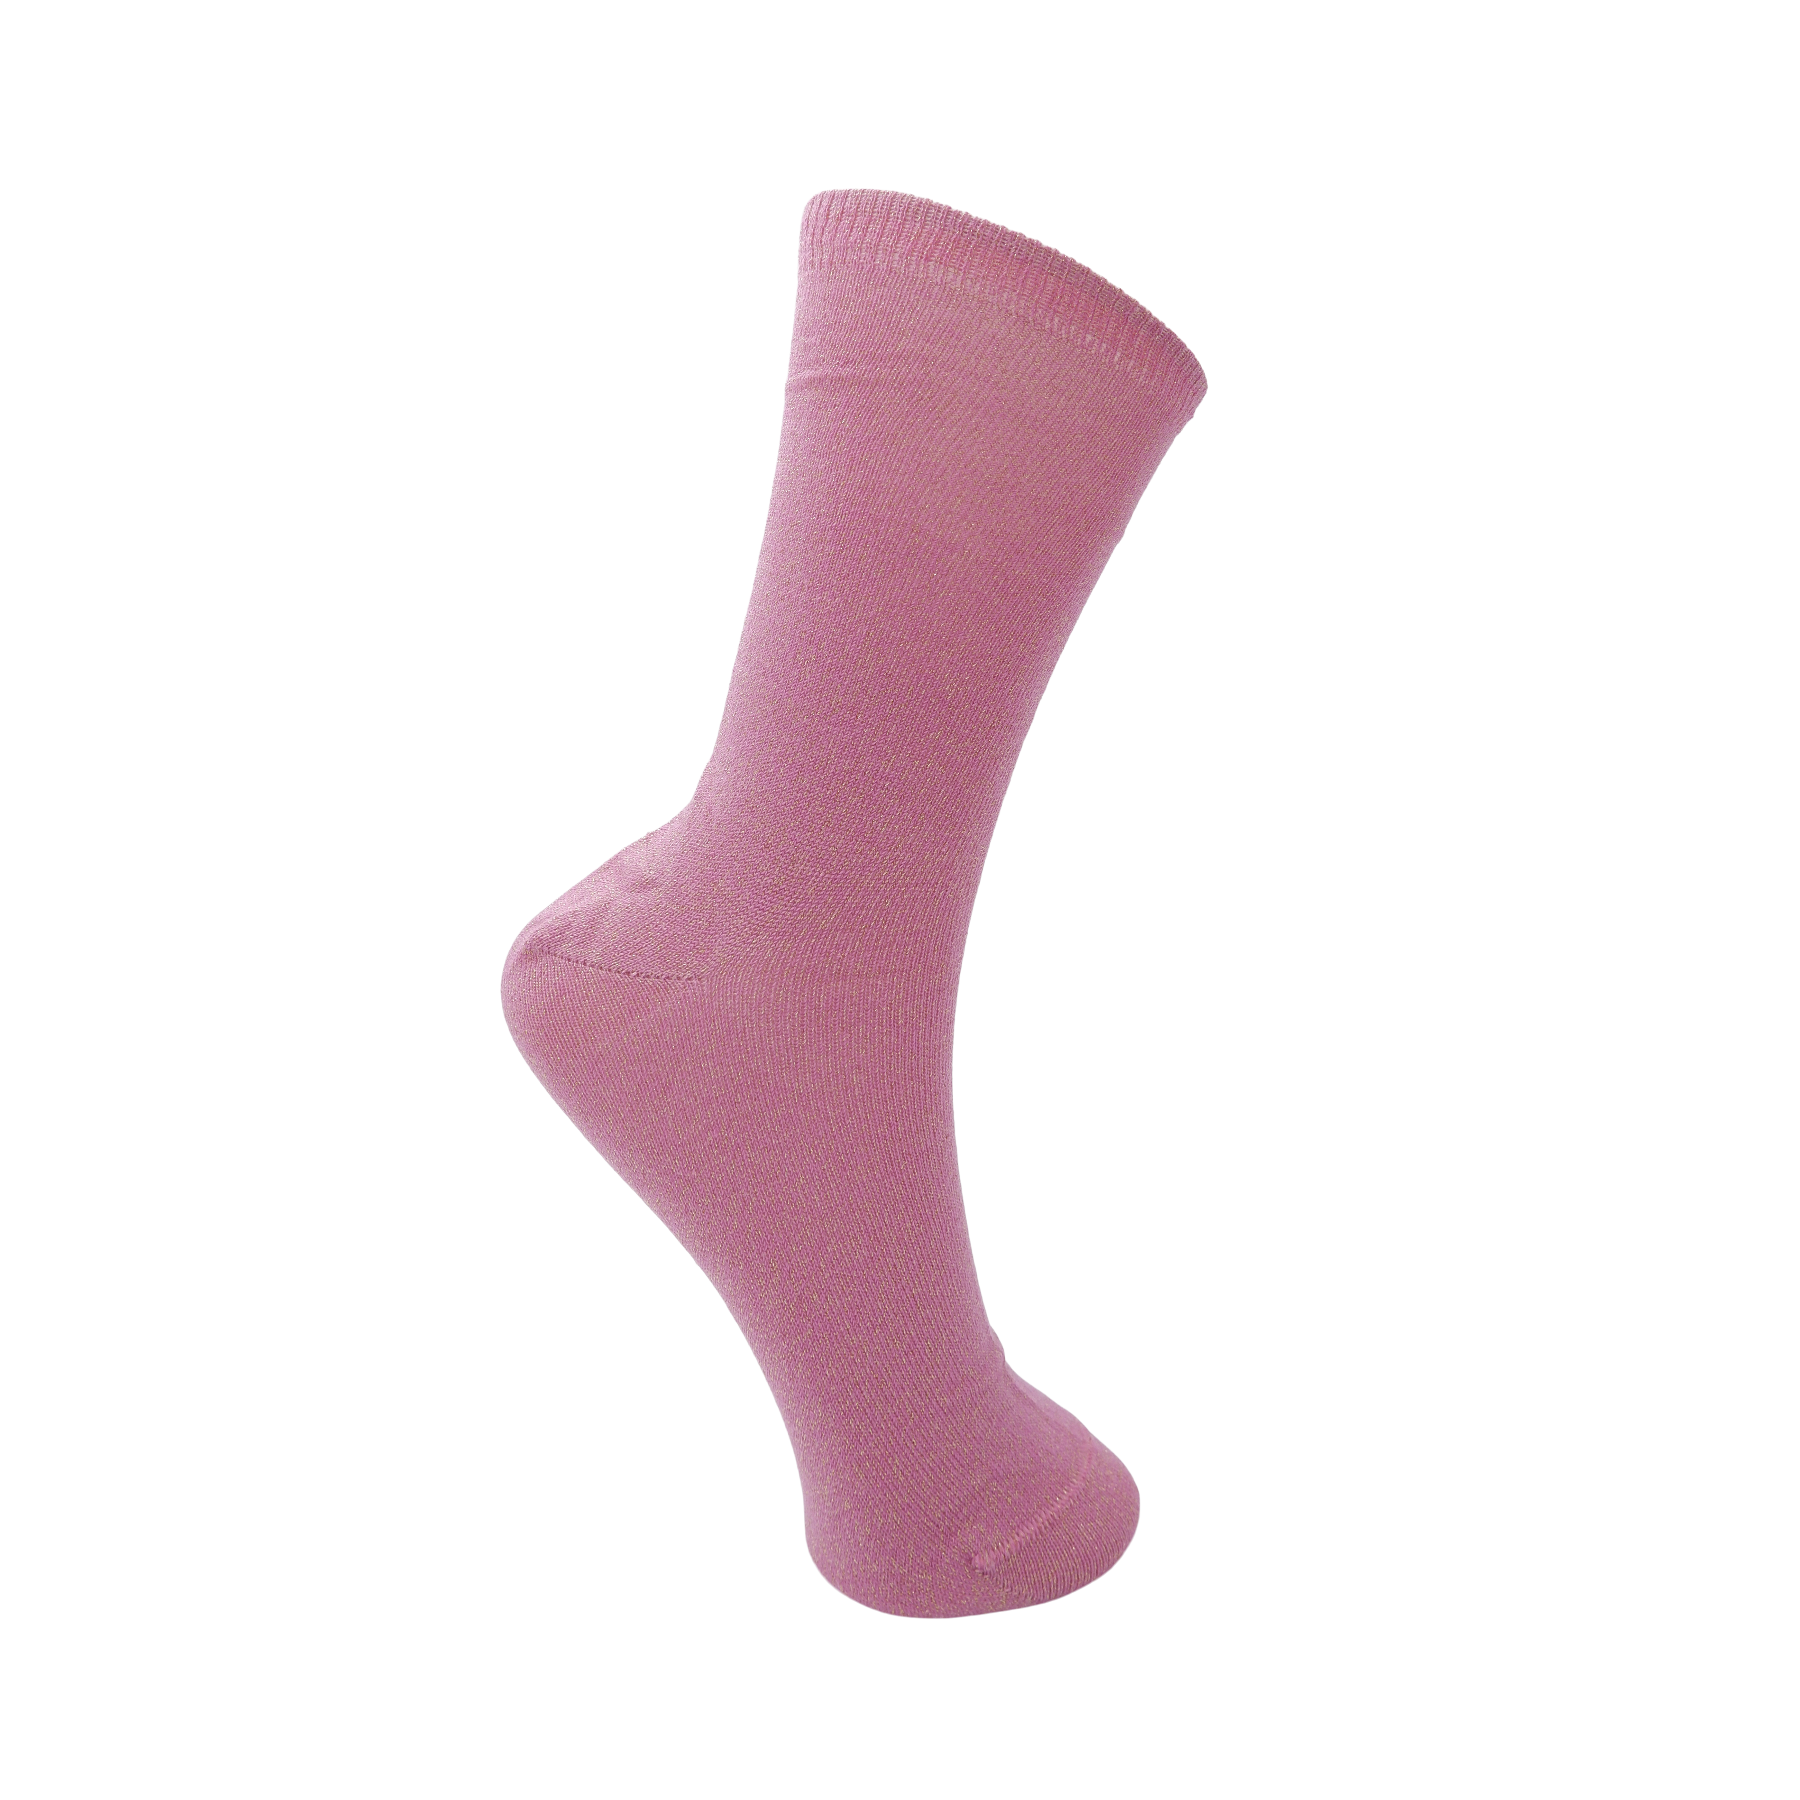 Fairy Rose Lurex Socks by Black Colour